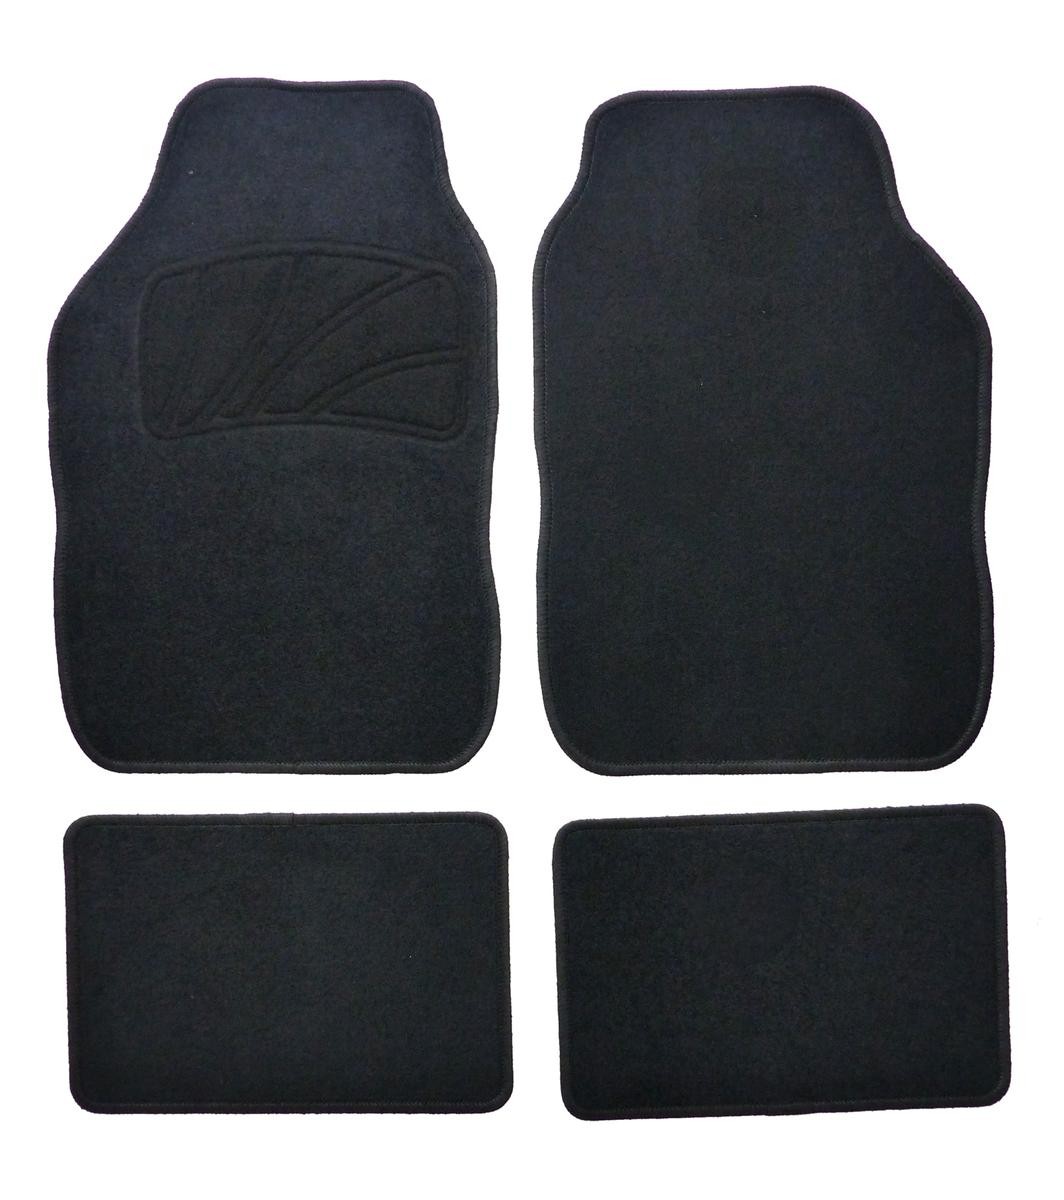 XL 551508 Floor mats Textile, Front and Rear, Quantity: 4, black, Universal fit